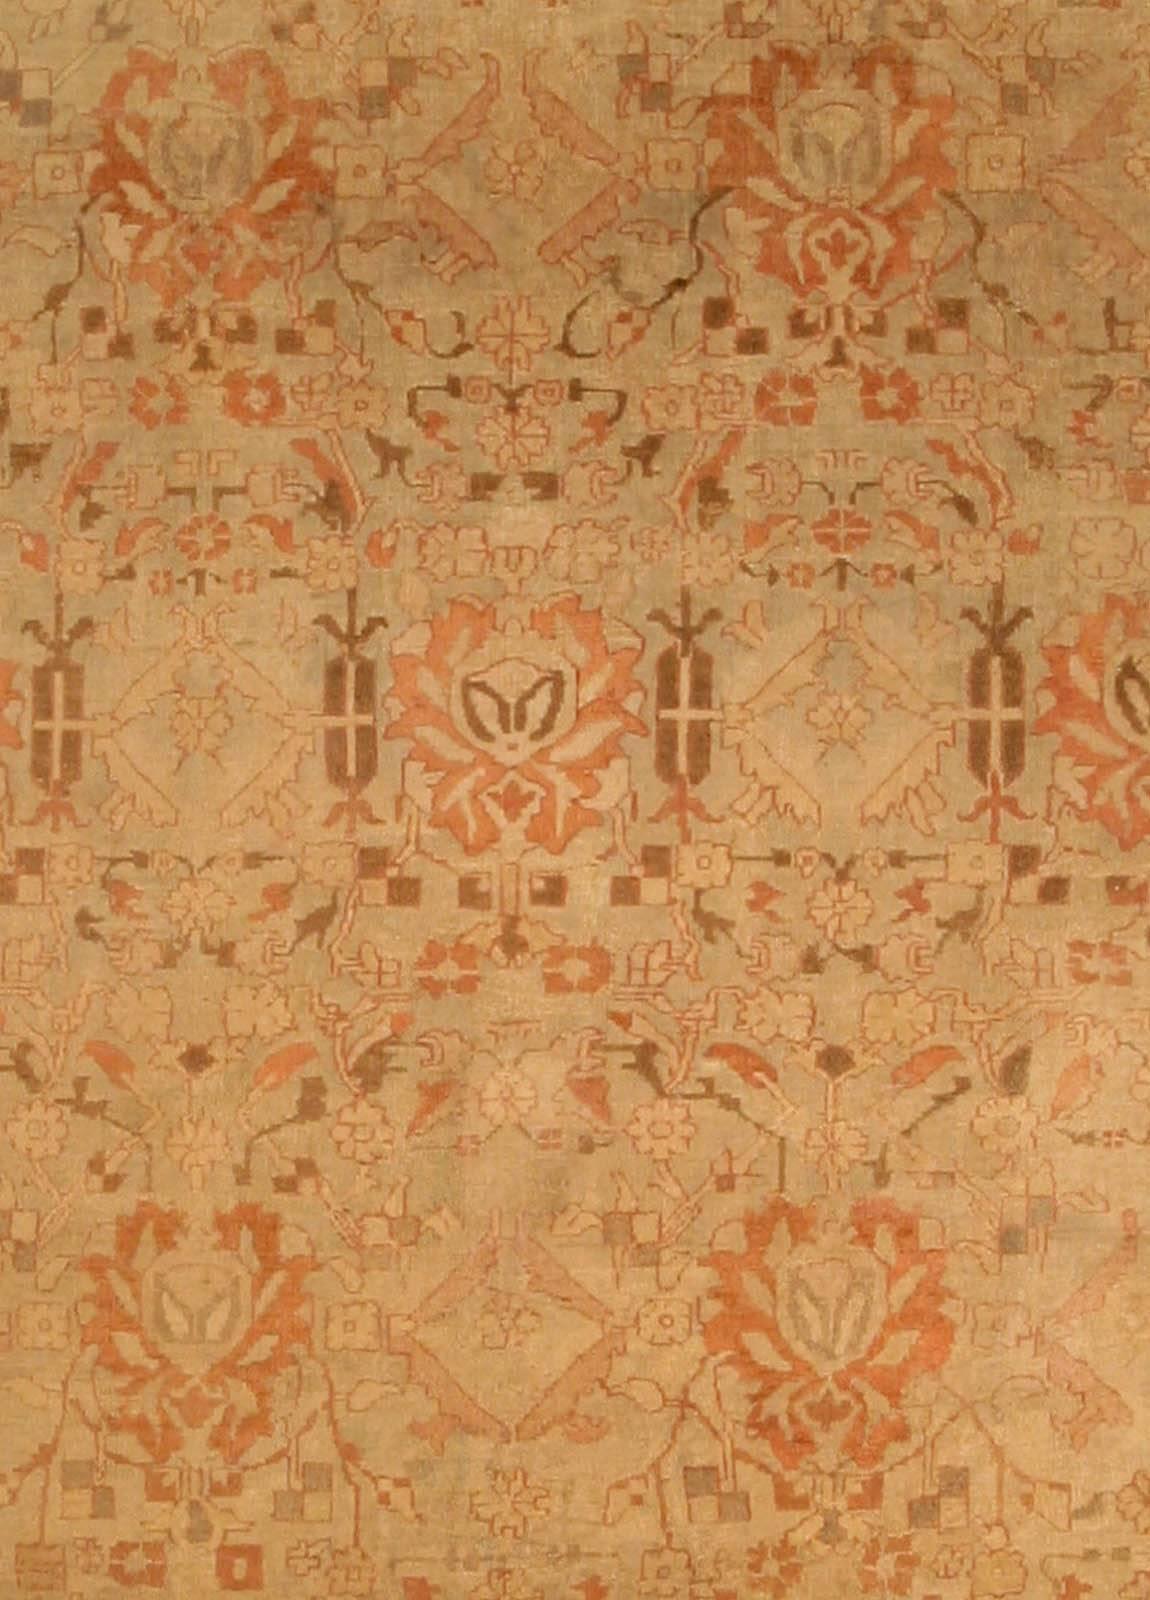 19th Century Indian Amritsar Handmade Wool Rug
Size: 13'5